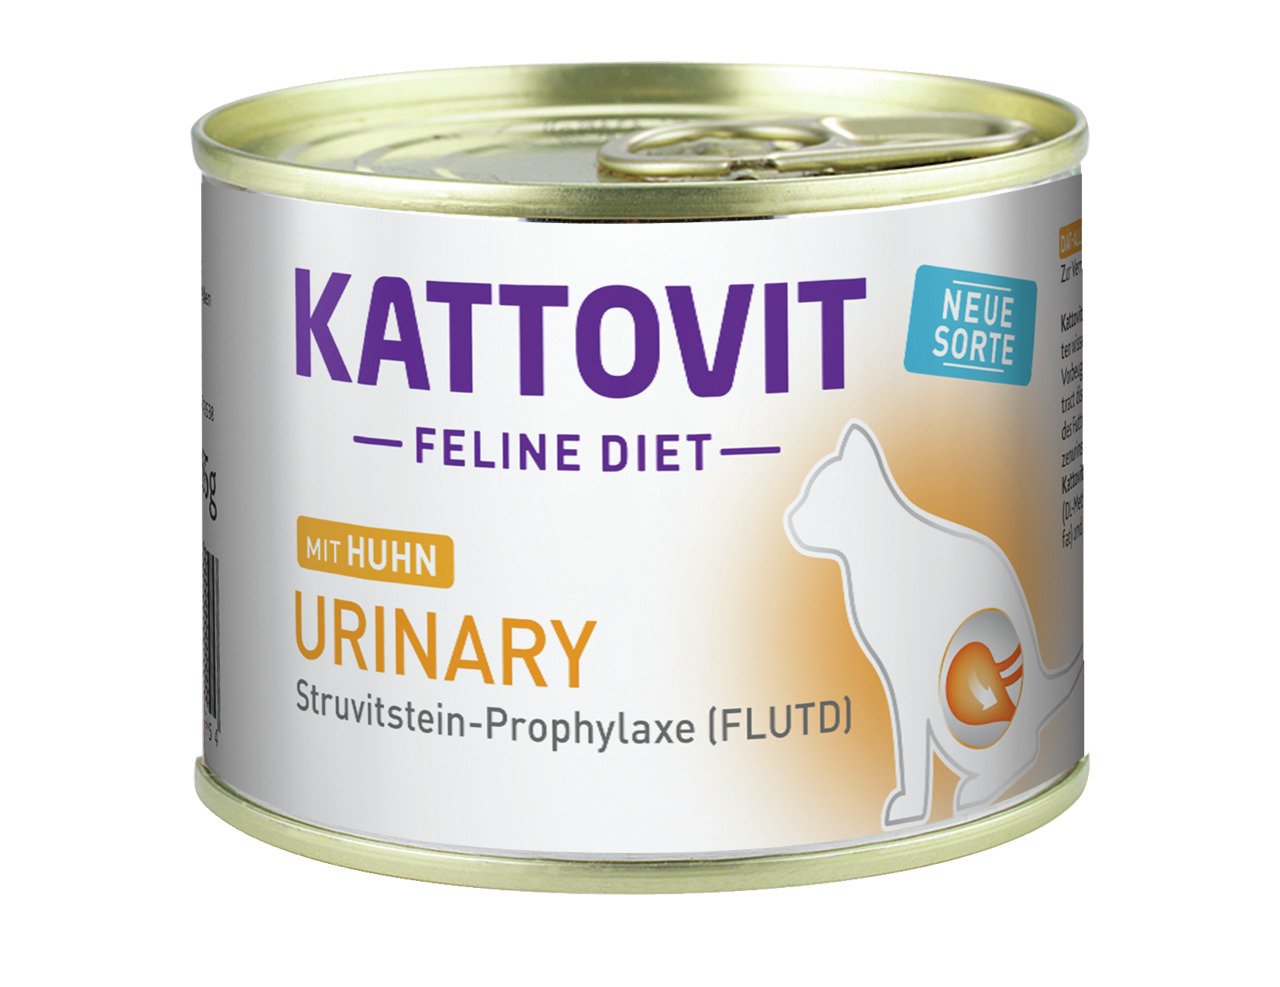 Kattovit Feline Diet Urinary mit Huhn Katzen Nassfutter 185 g